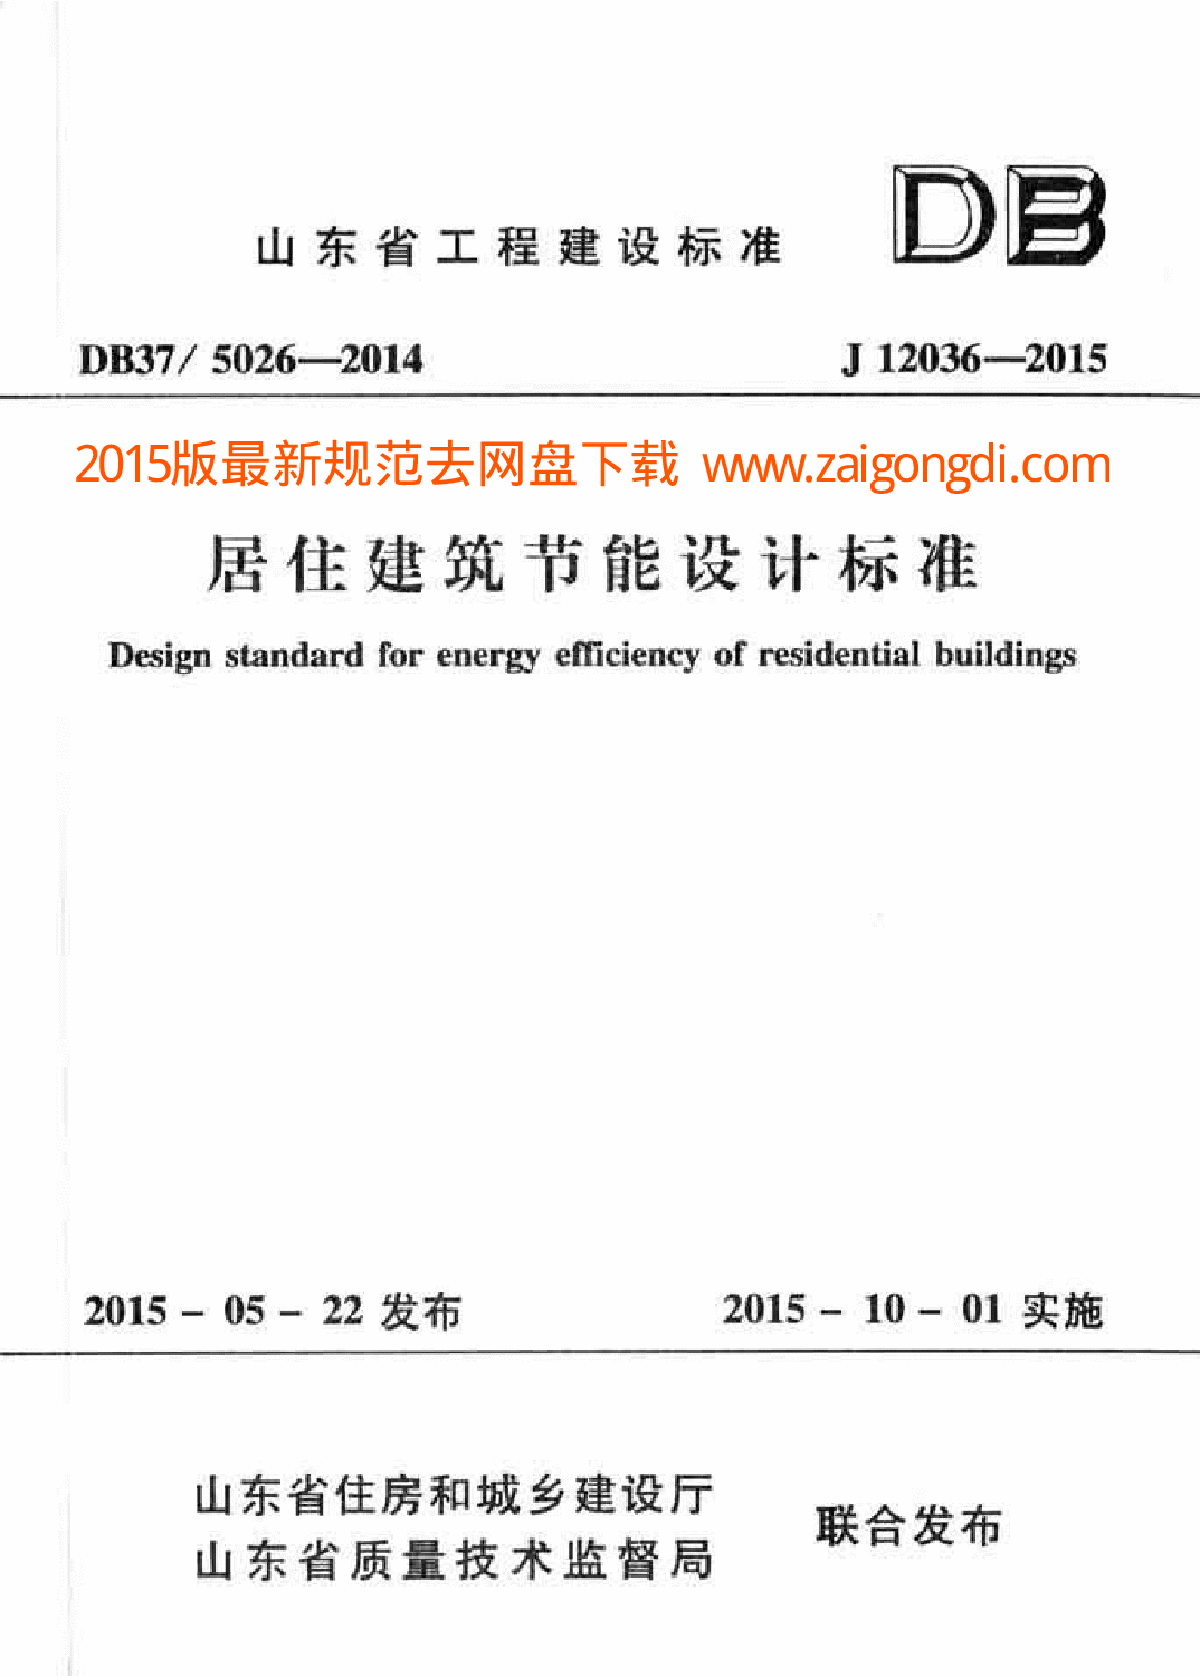 DB37 5026-2014 山东省居住建筑节能设计标准-图一